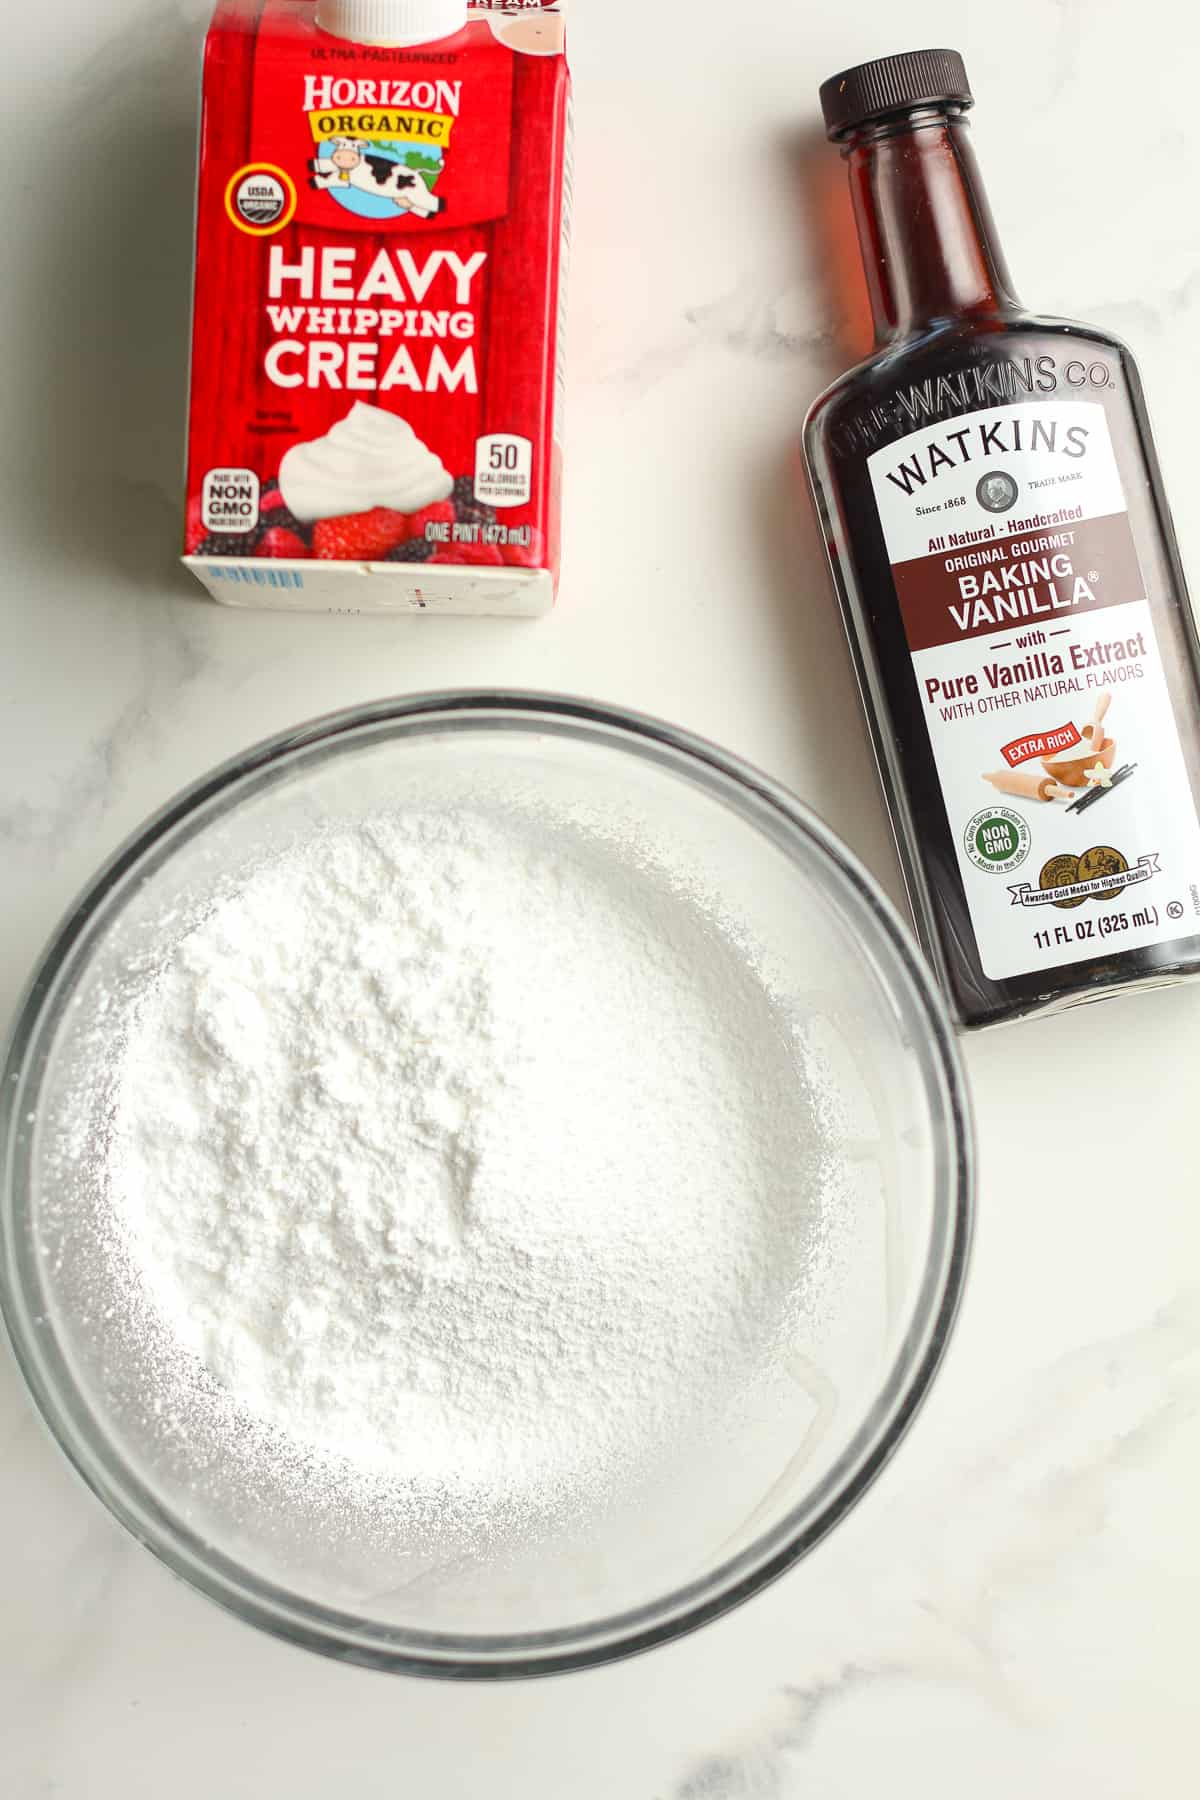 The icing ingredients - powdered sugar, vanilla, and heavy cream.